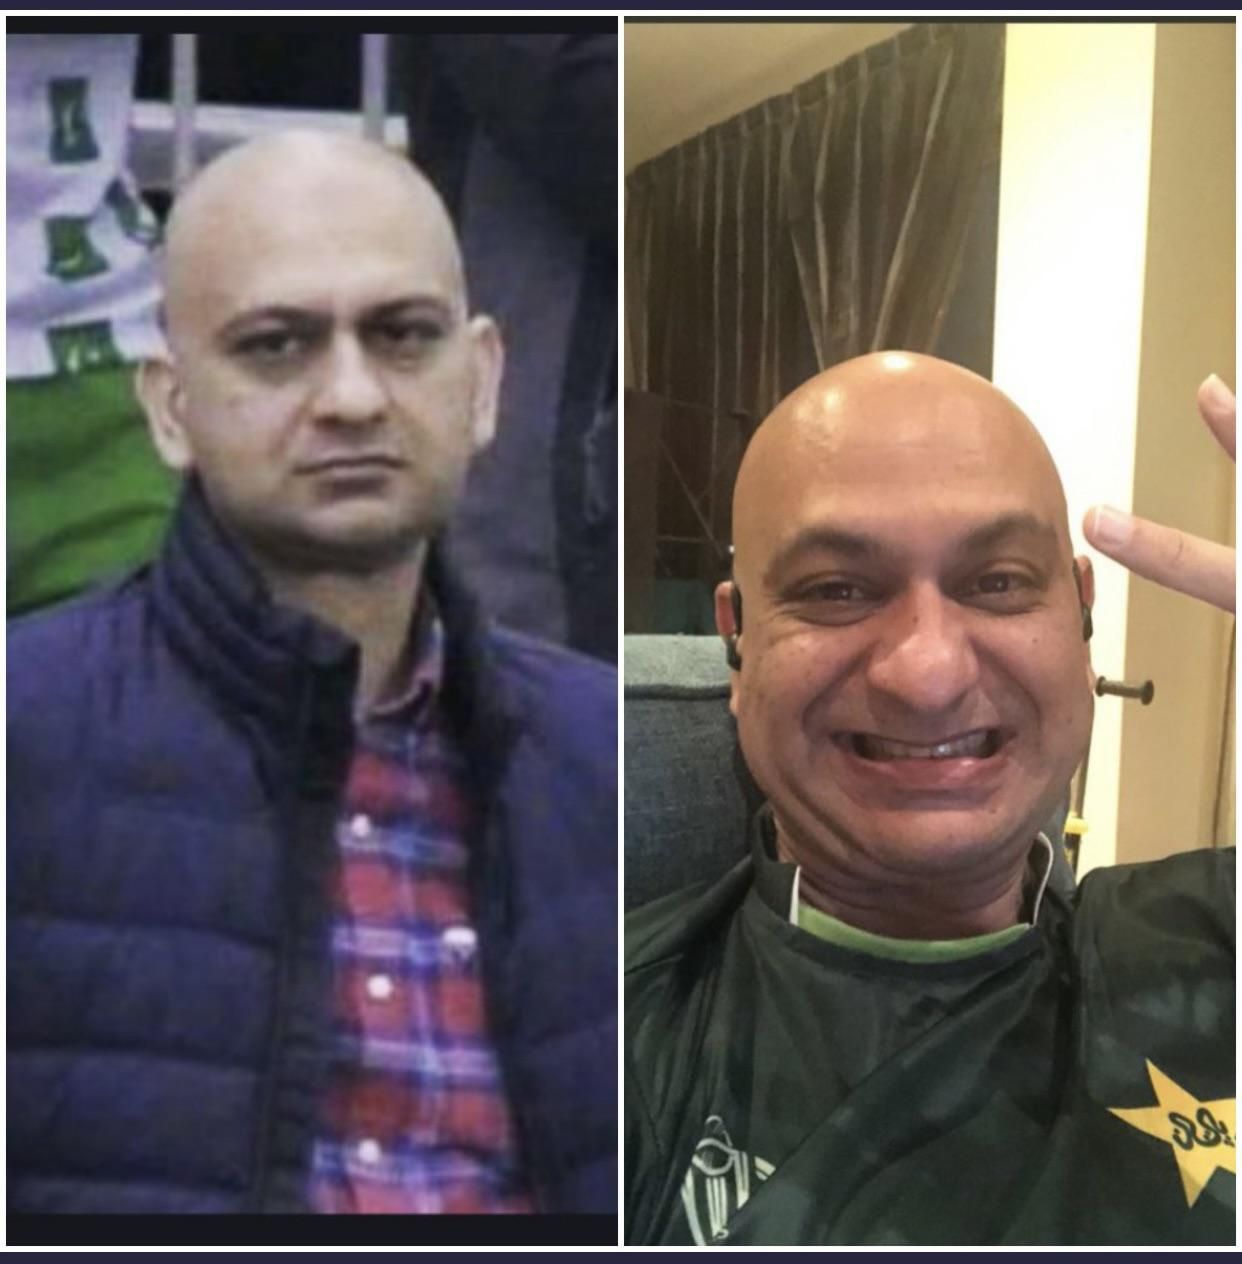 Look how happy he is after Pakistan beat India